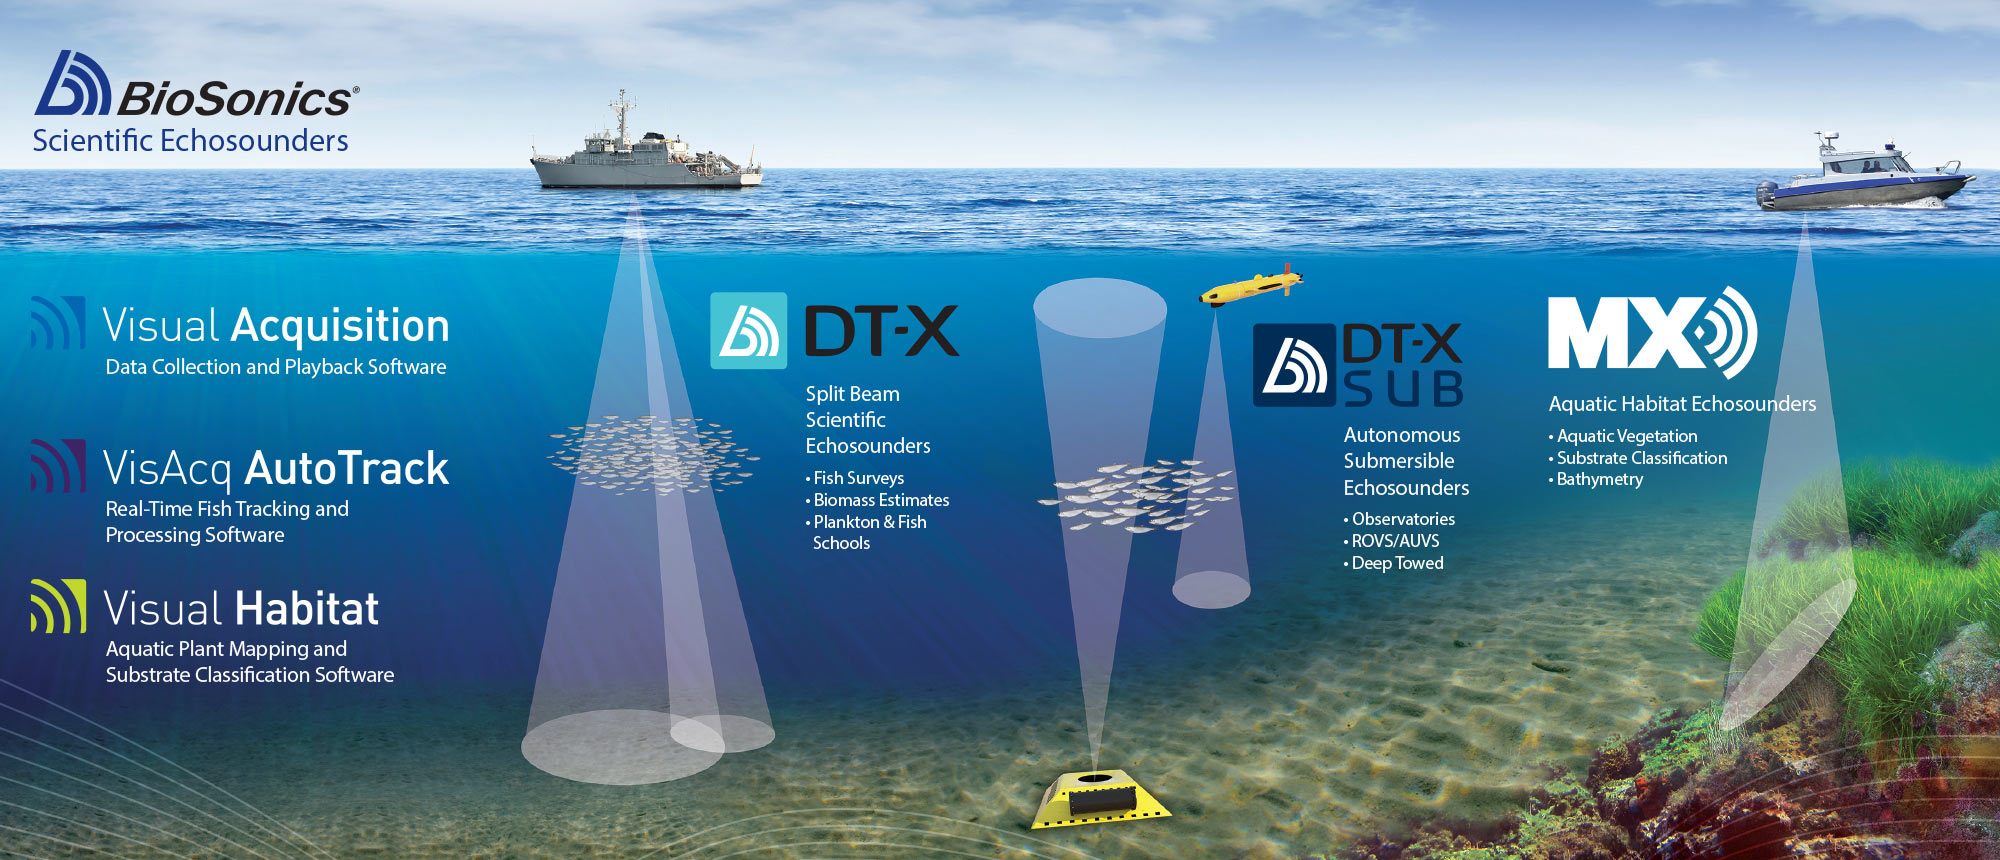 BioSonics Scientific Echo Sounders for Aquatic Ecosystems